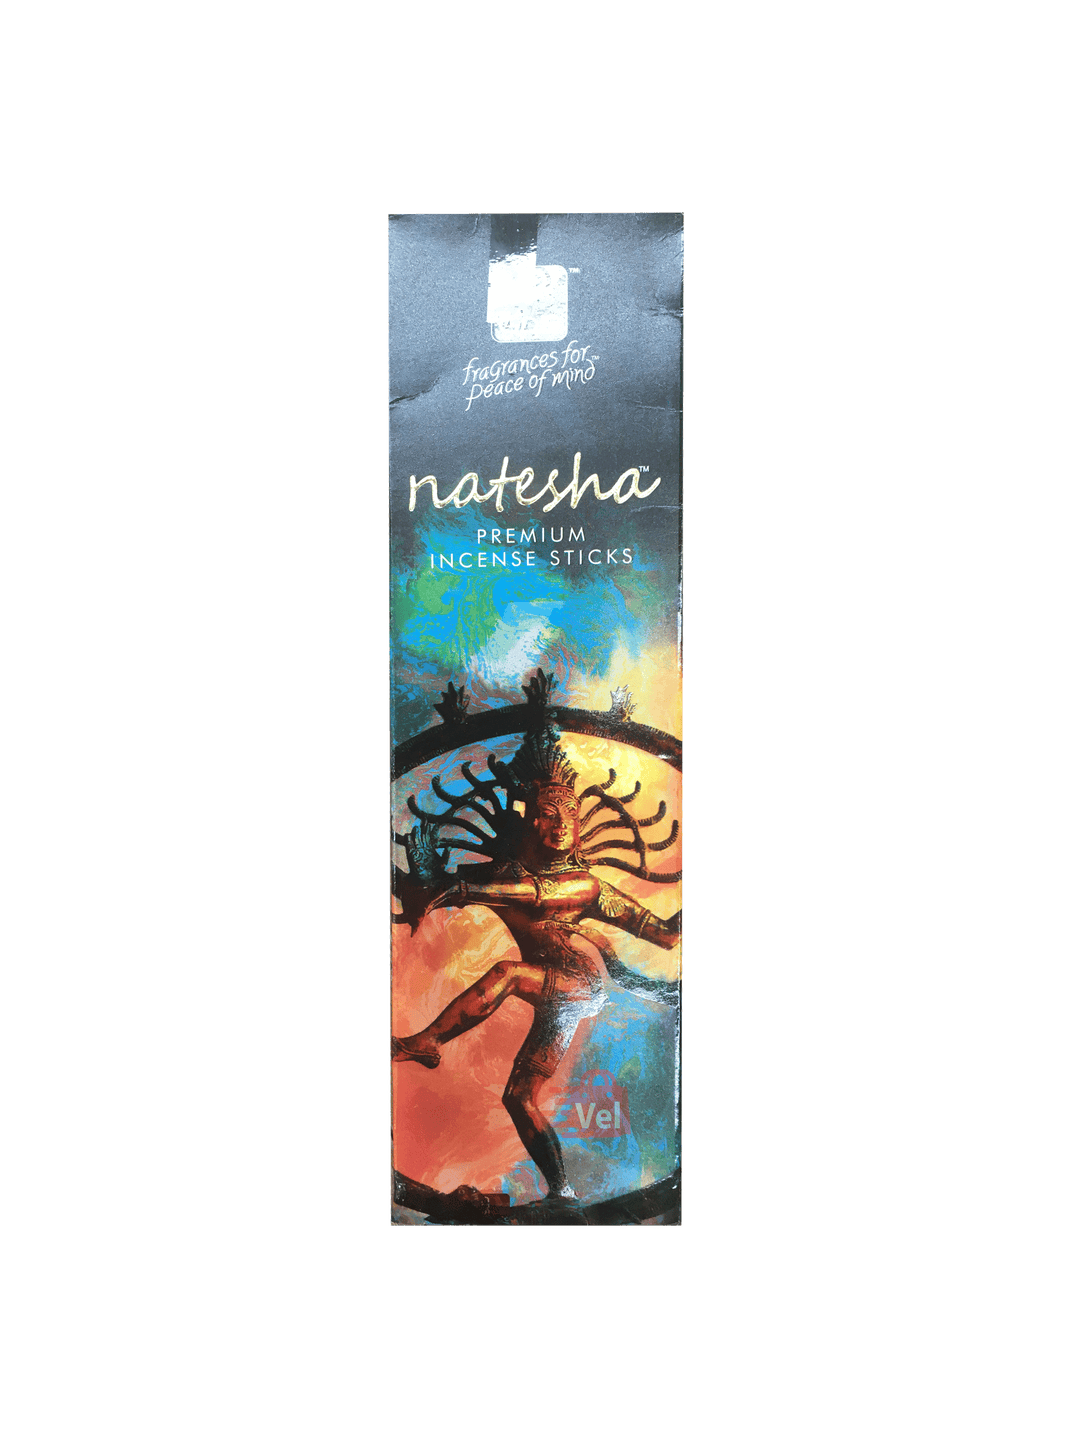 Natesha Premium Incense Sticks